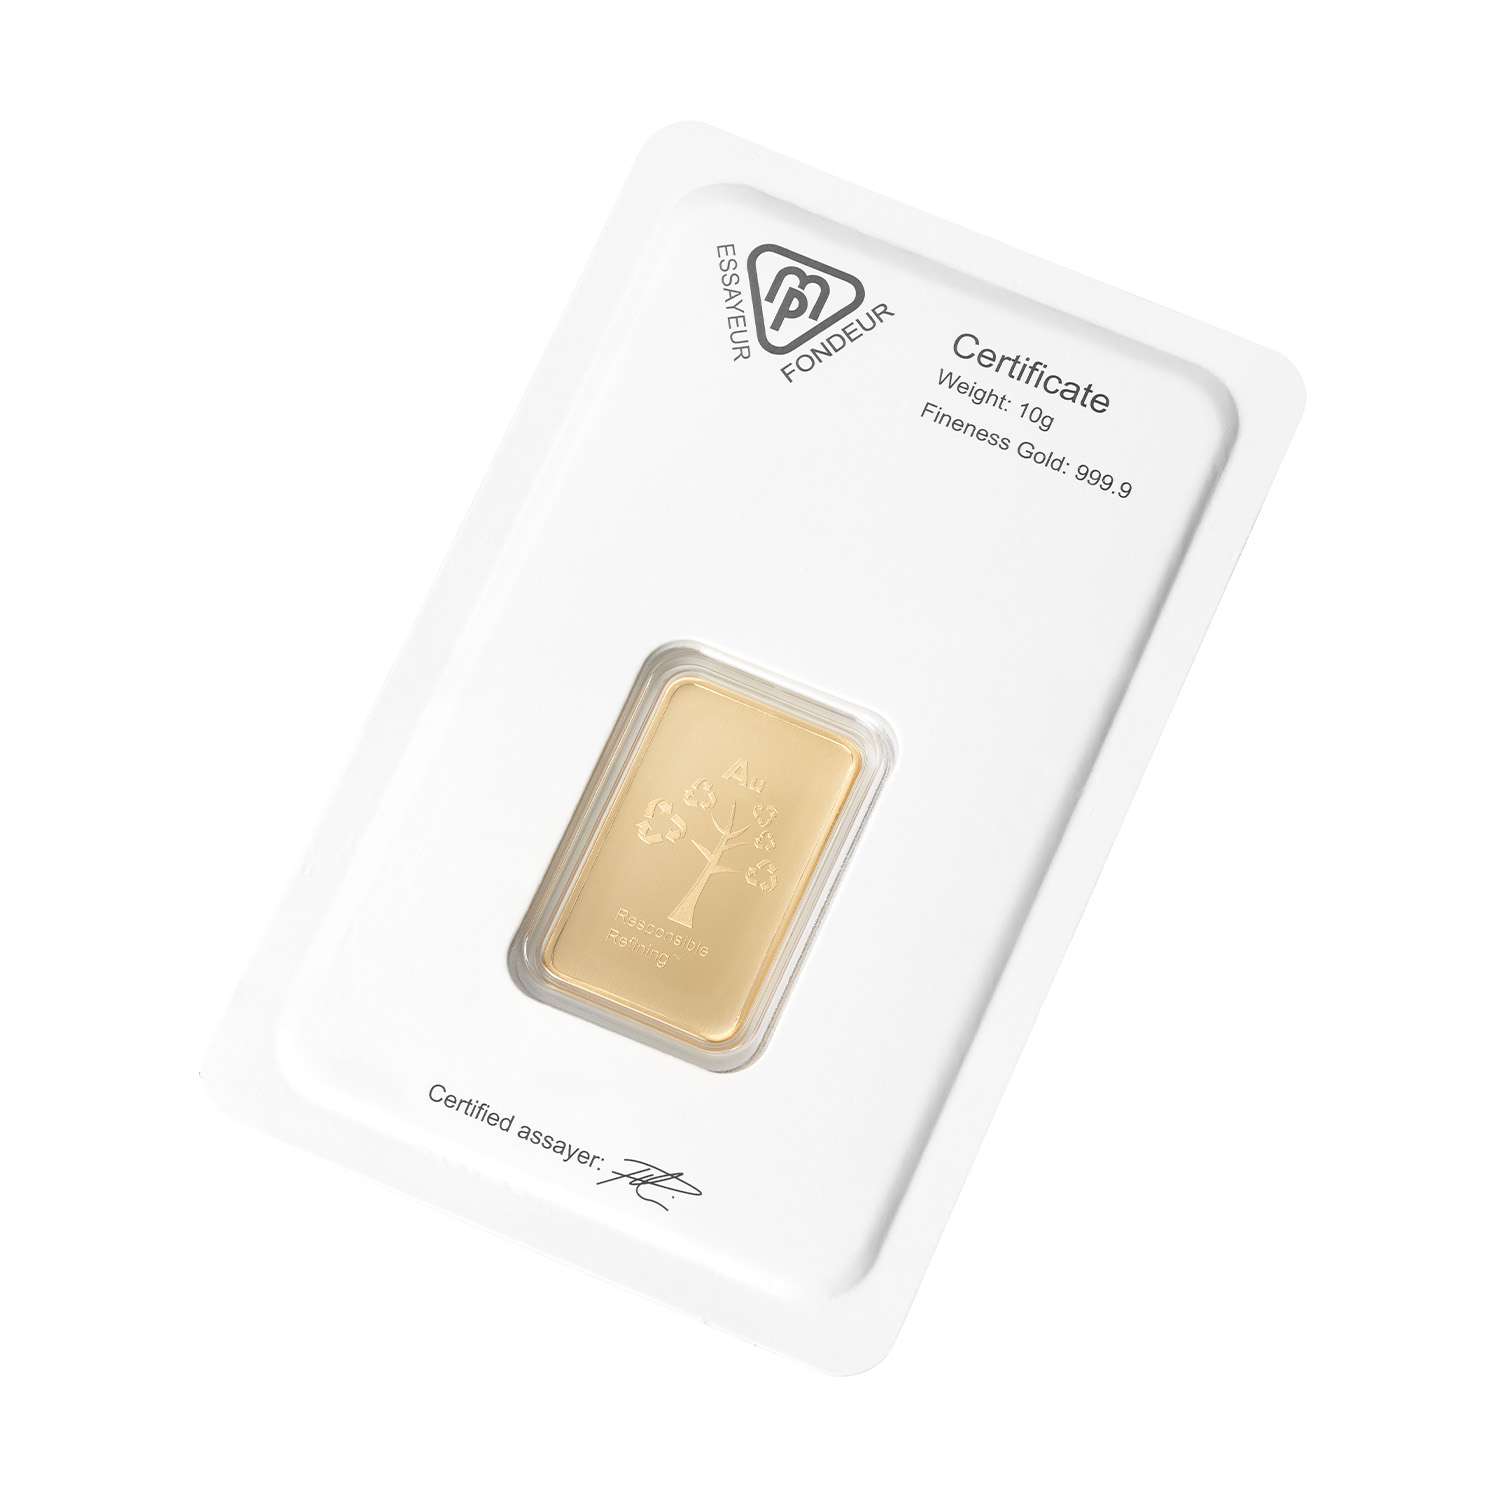 10g Metalor gold bar - reverse packaging